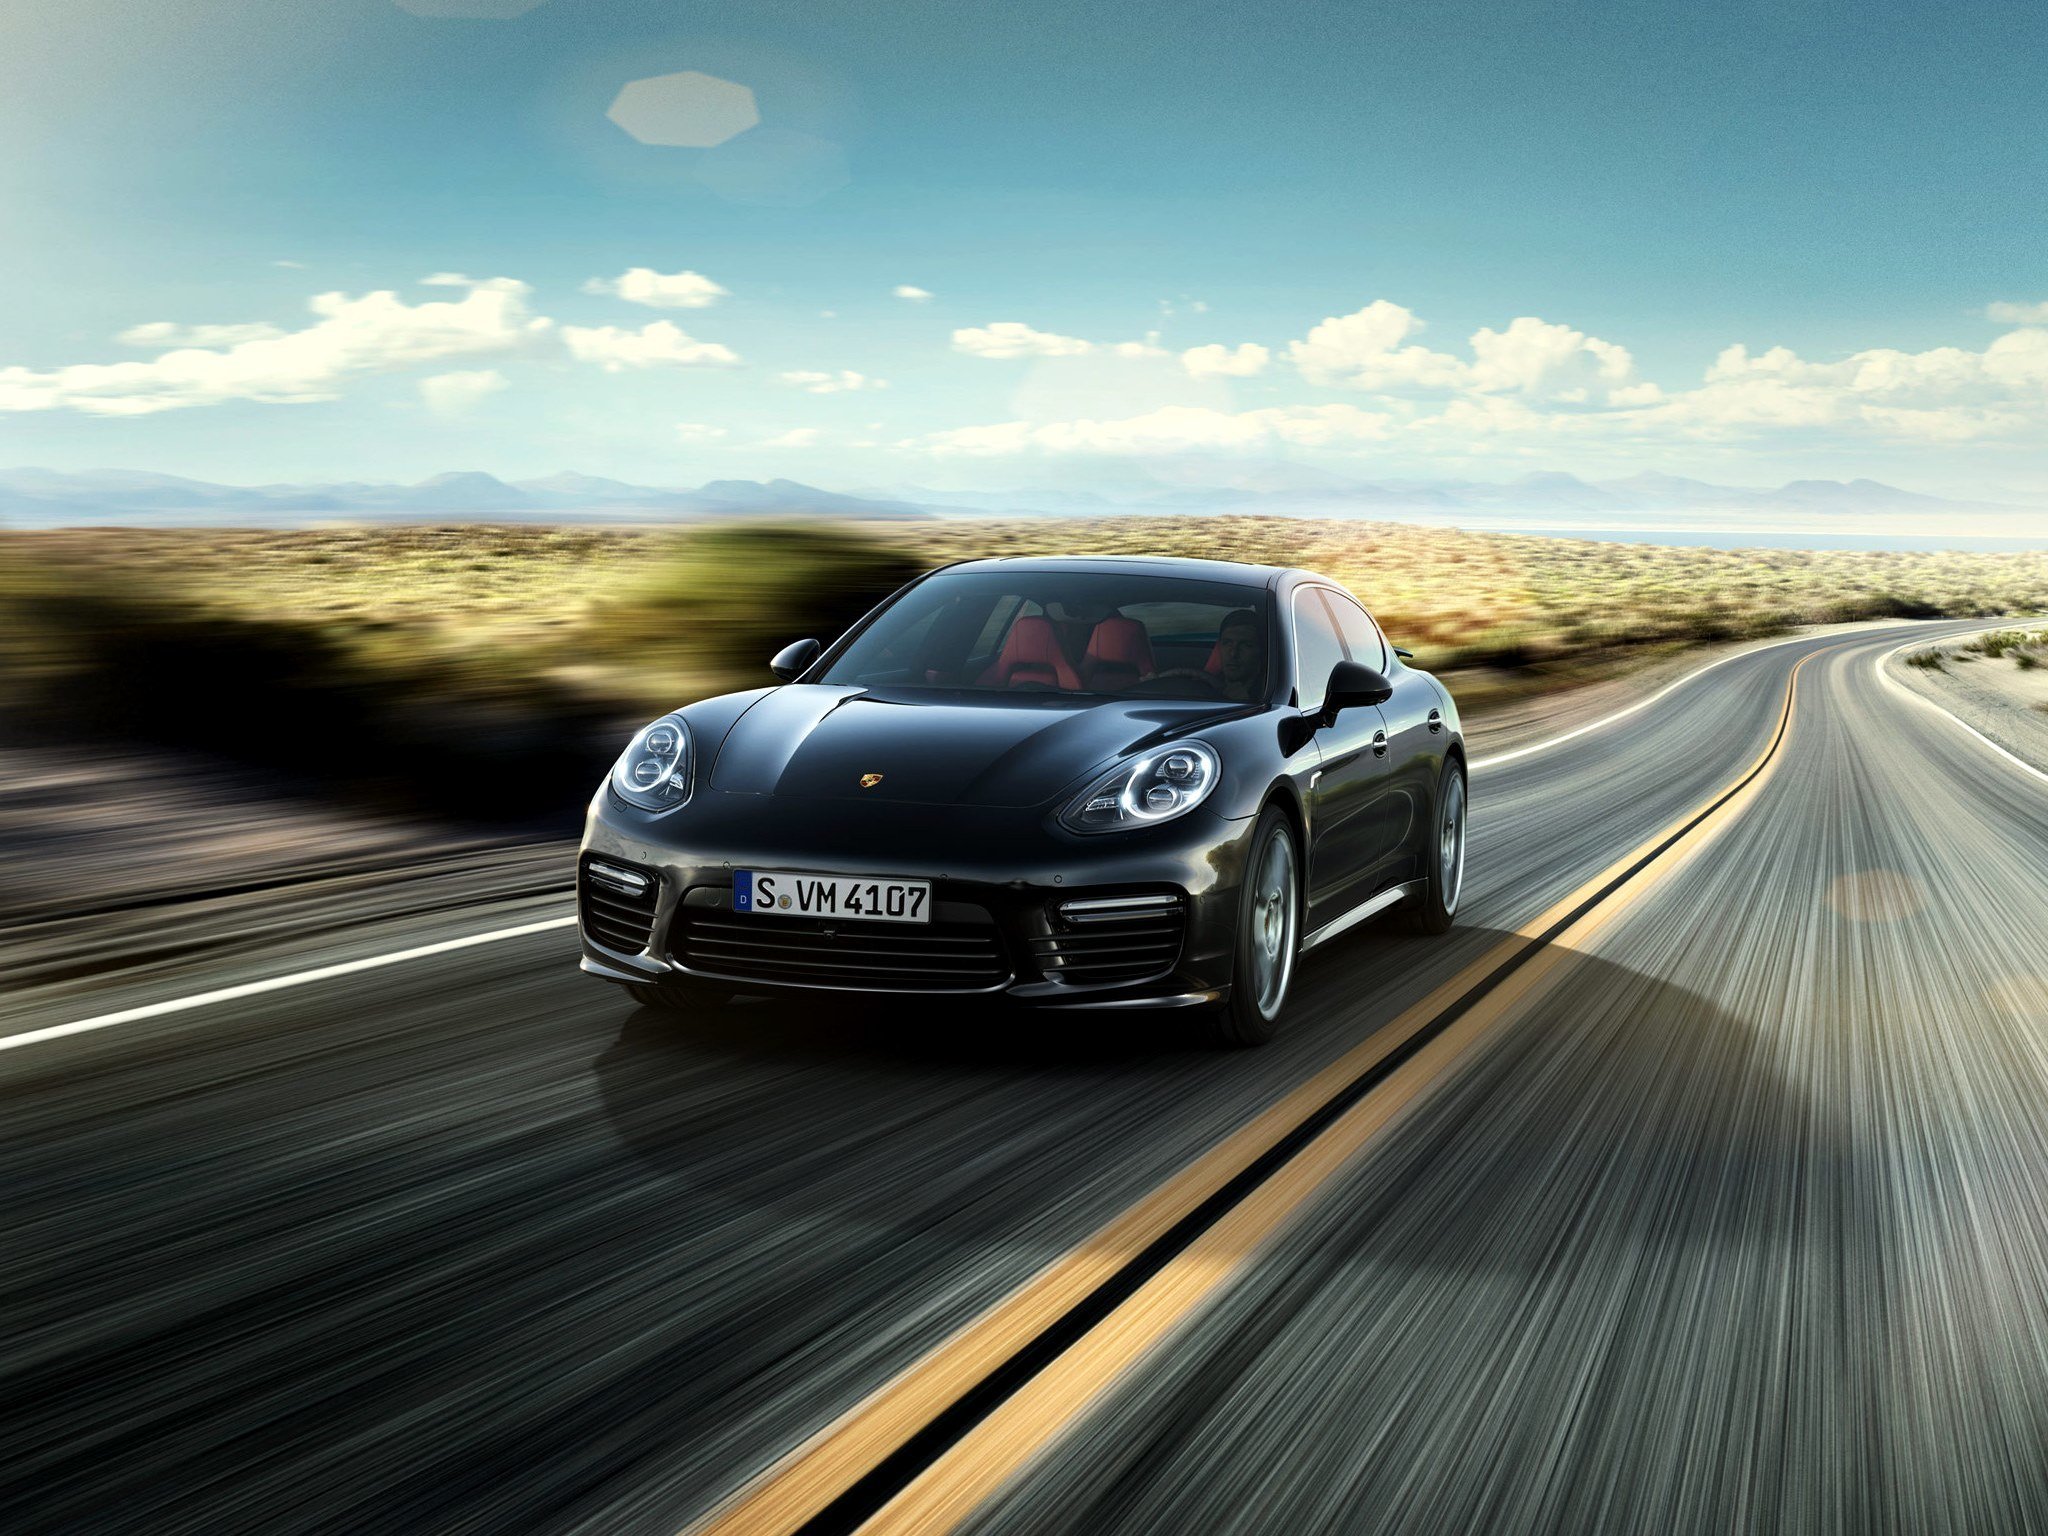 Best Porsche Panamera background ID:27826 for High Resolution hd 2048x1536 PC